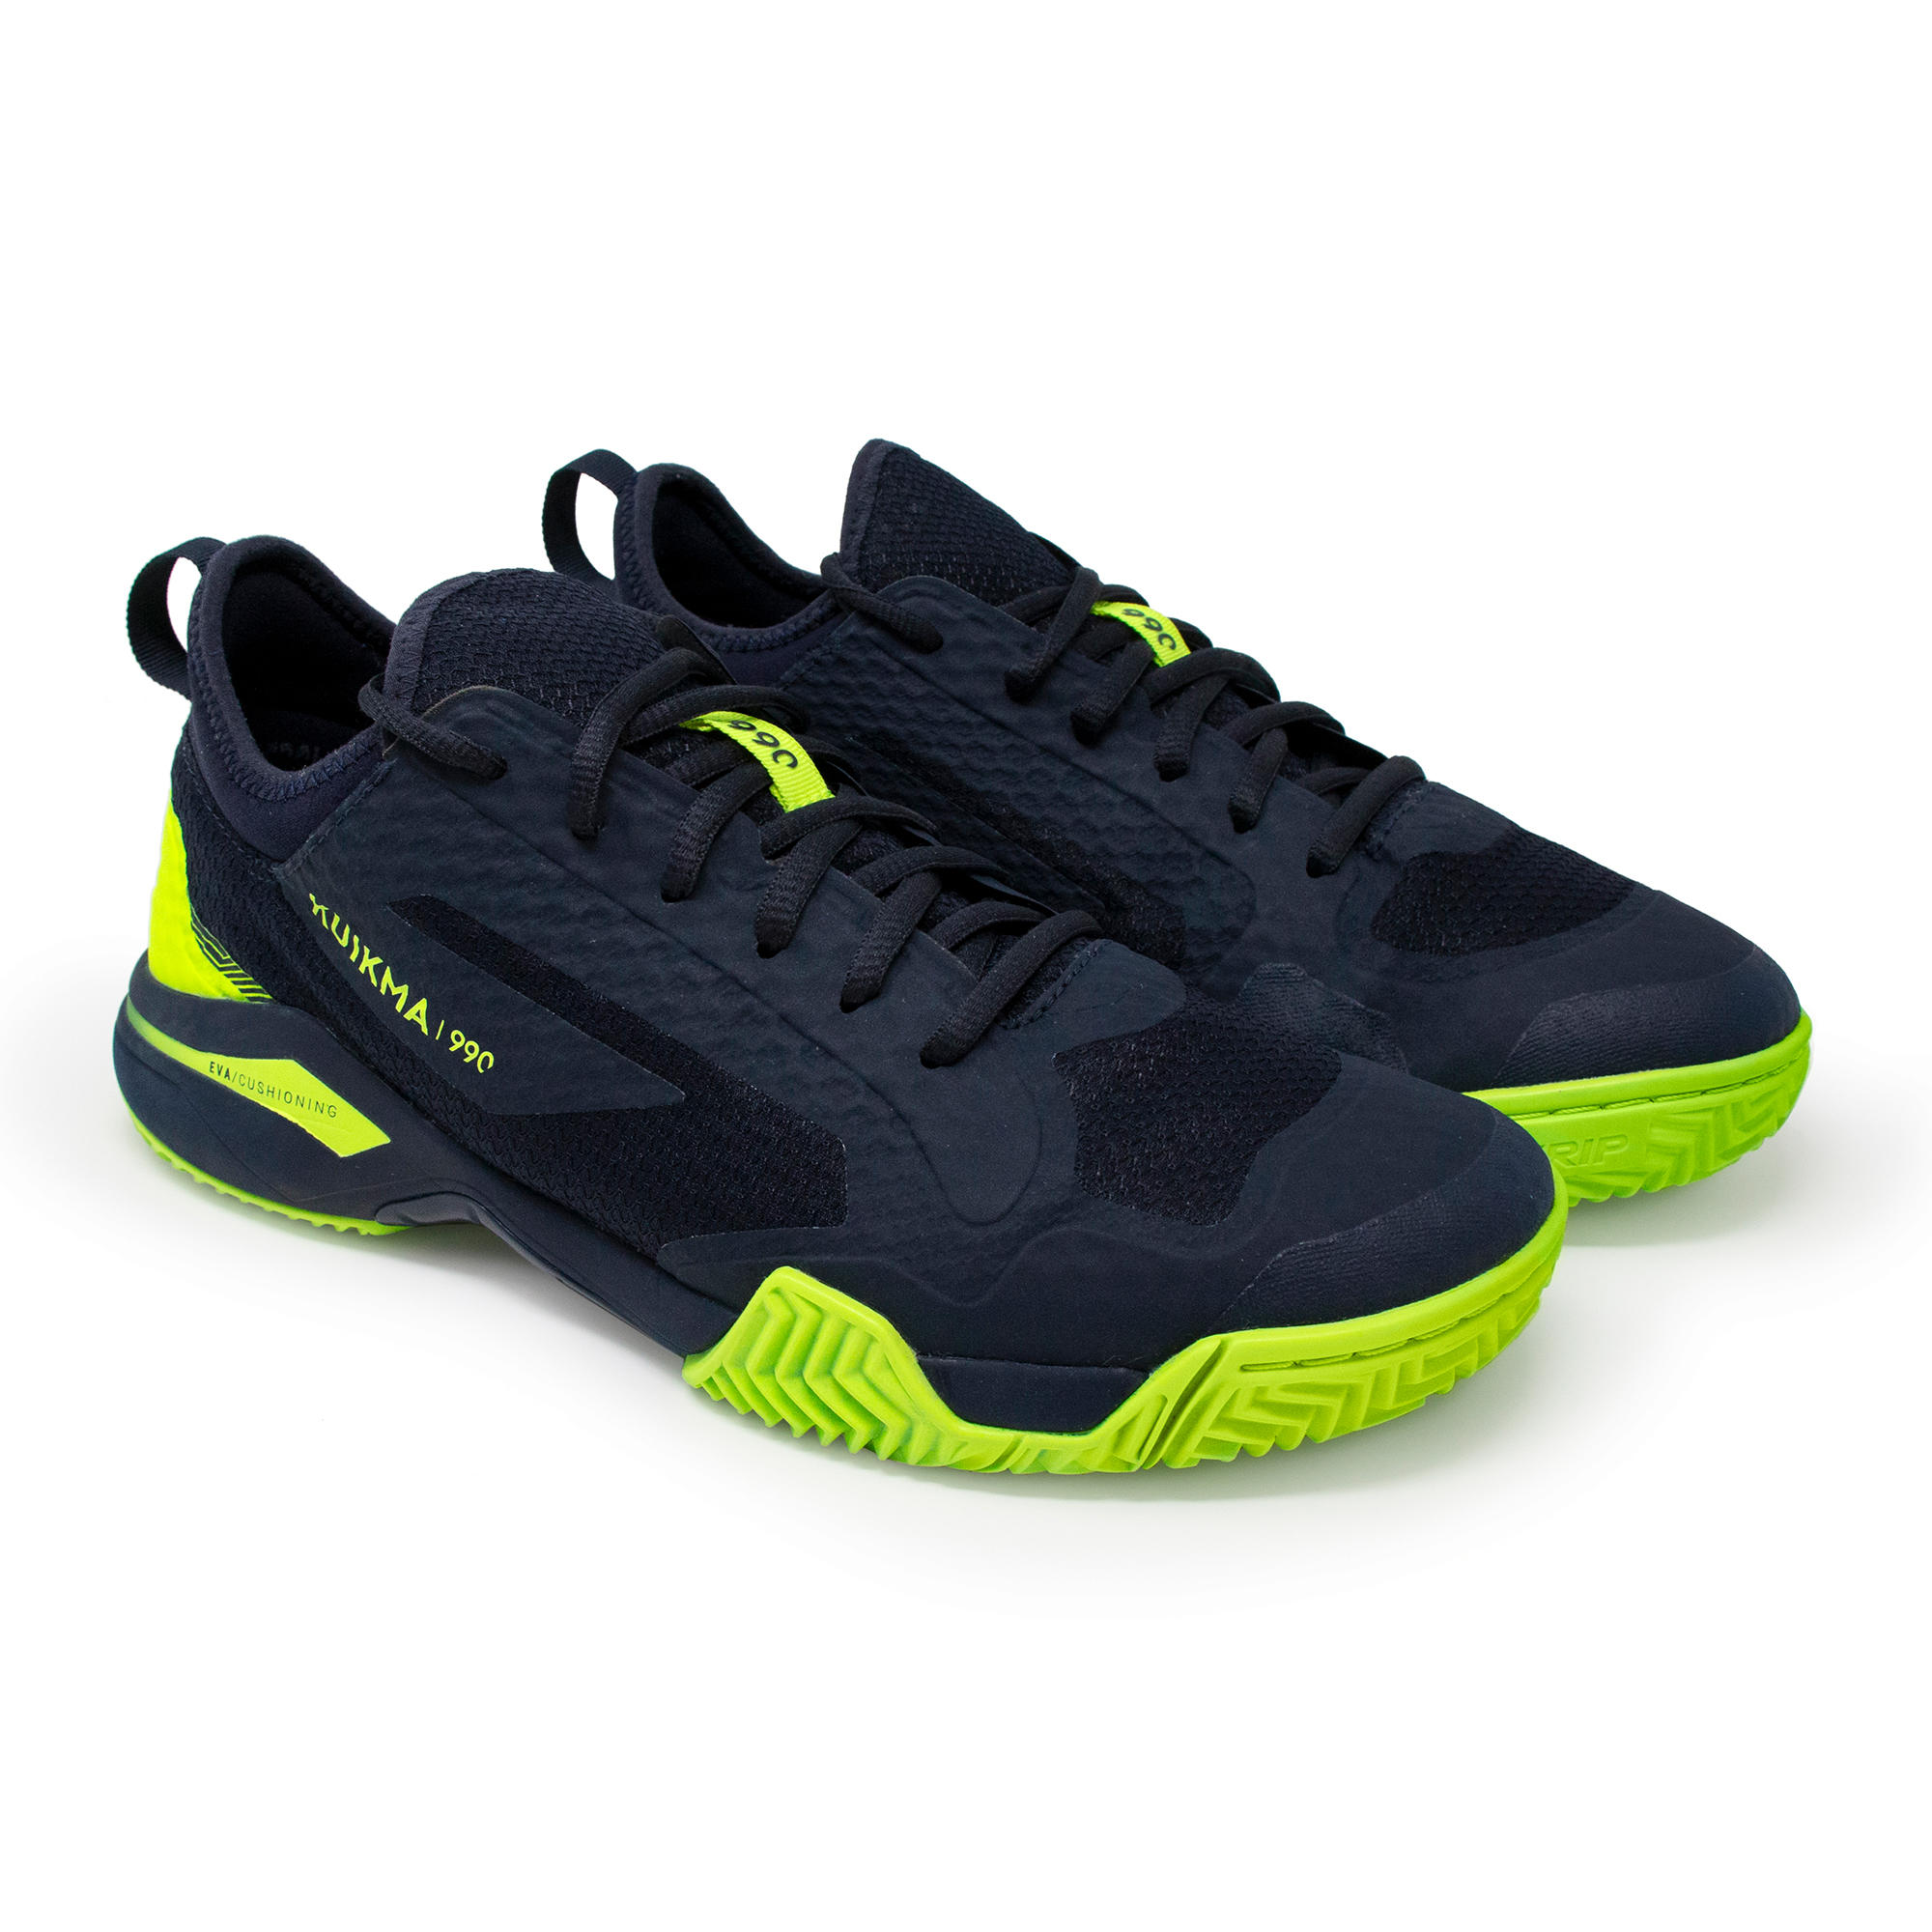 Men's Padel Shoes PS 990 Dynamic - Blue/Yellow 7/16